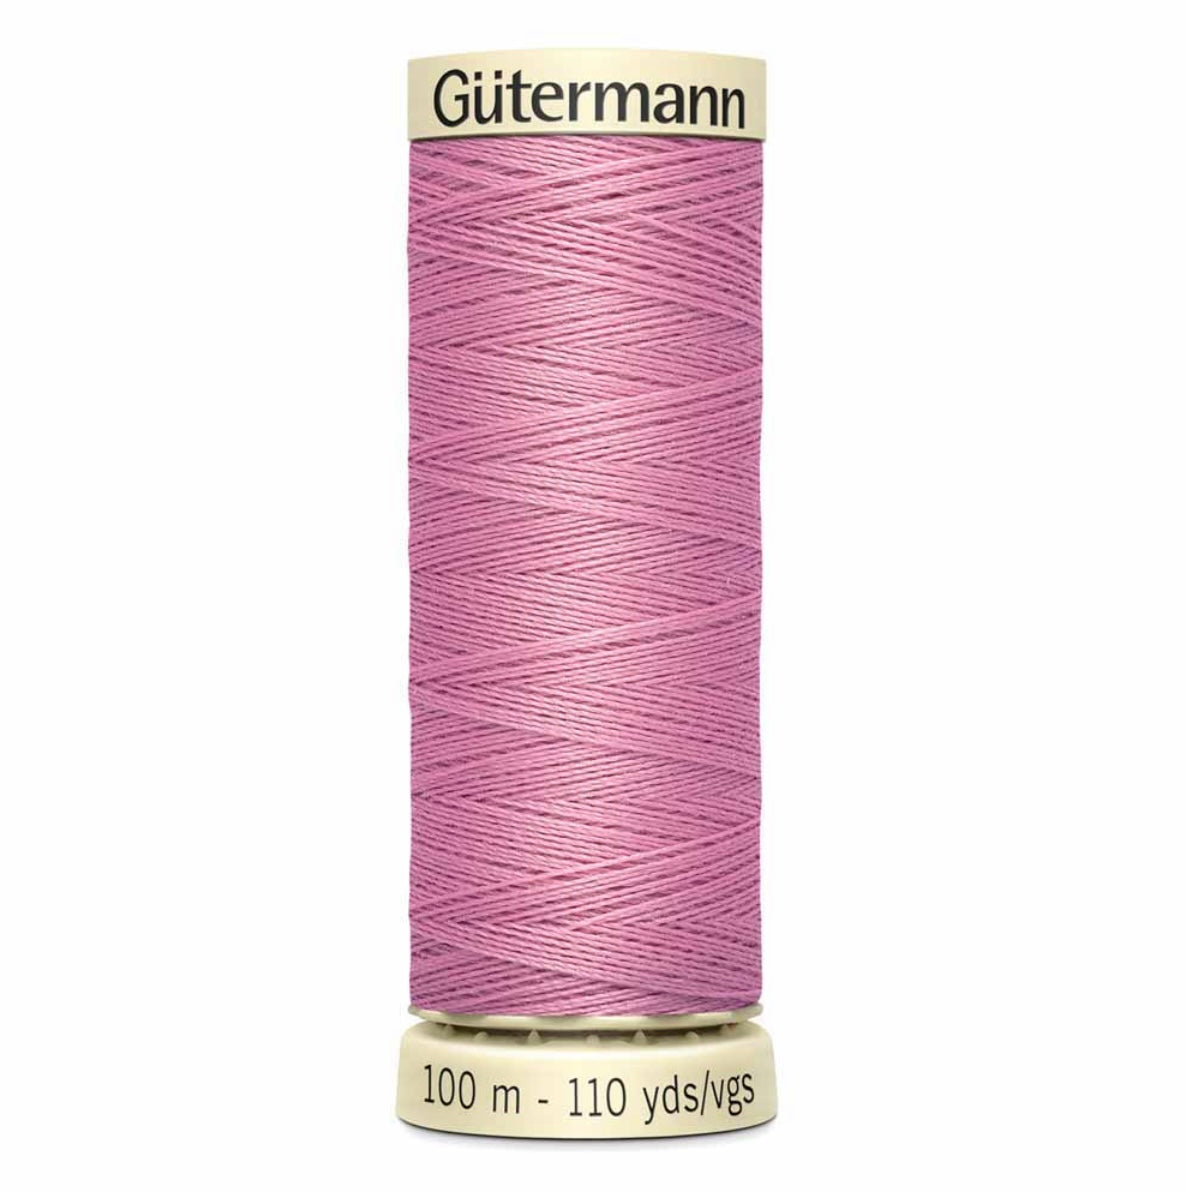 Sew-All Polyester Thread - Gütermann - Col. 322 / Medium Rose